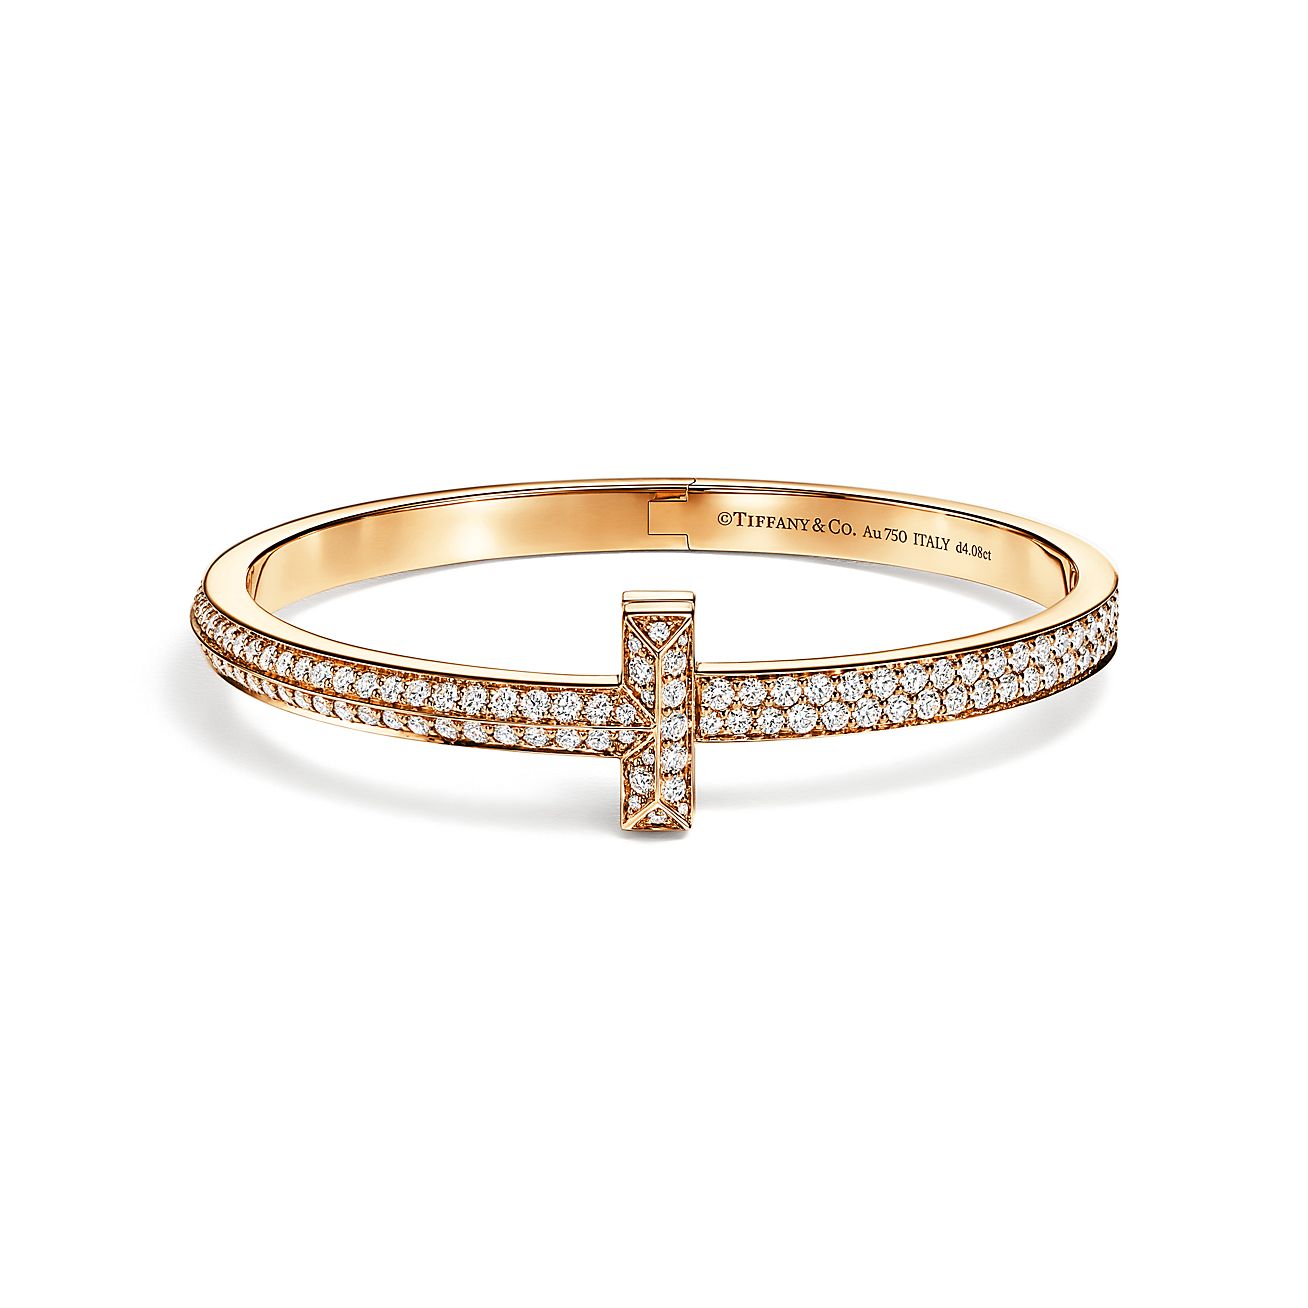 tiffany bangle bracelet with diamonds